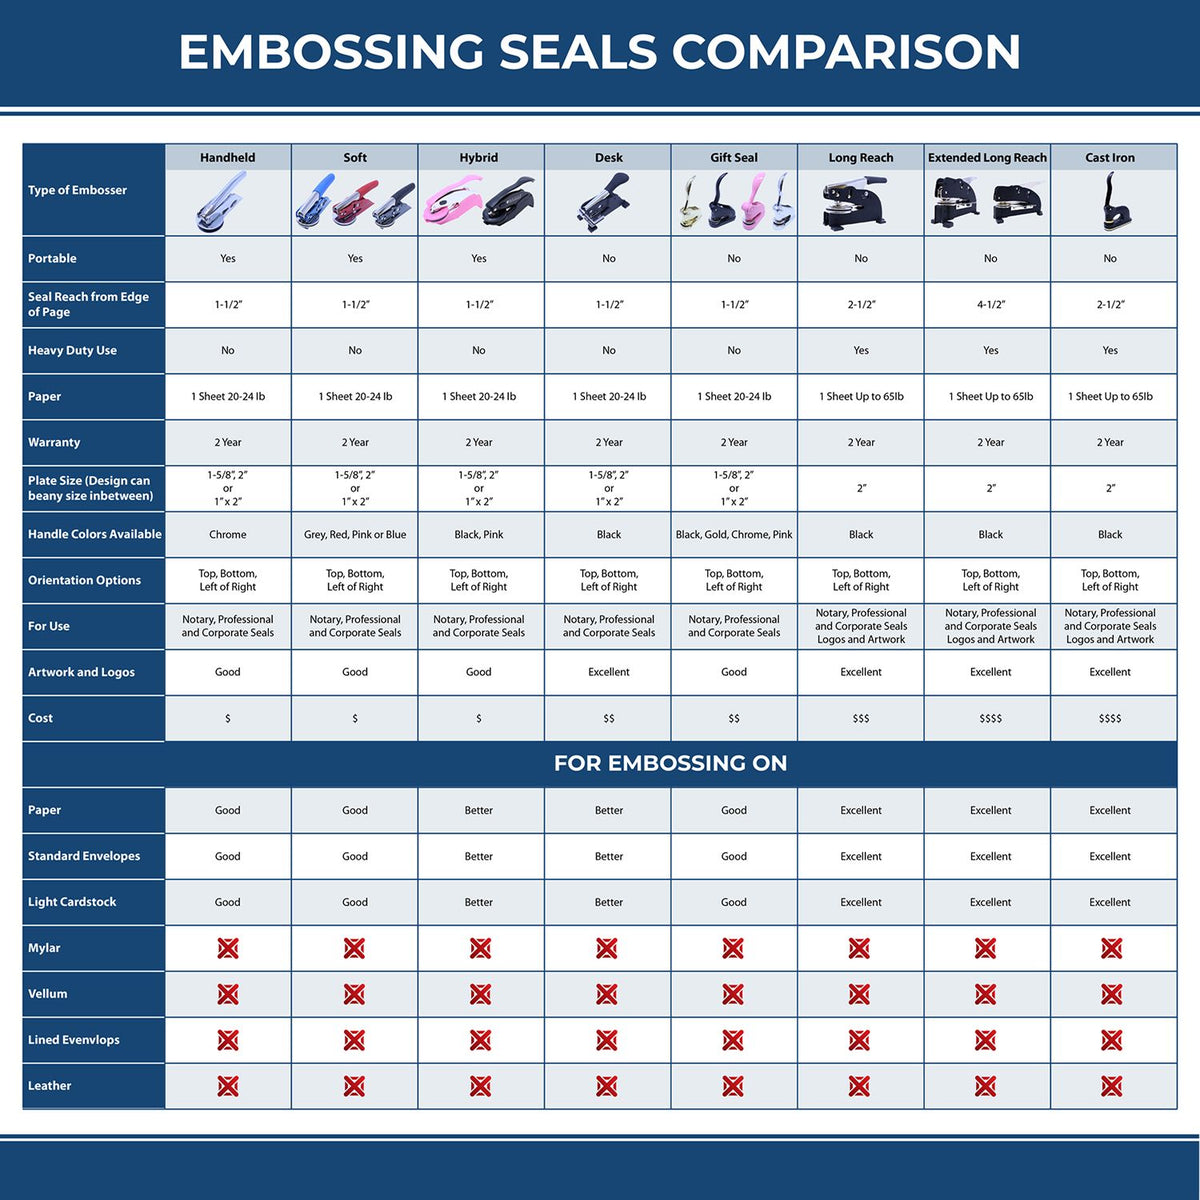 Public Weighmaster Blue Soft Seal Handheld Embosser 3037WE Embossing Seal Comparison